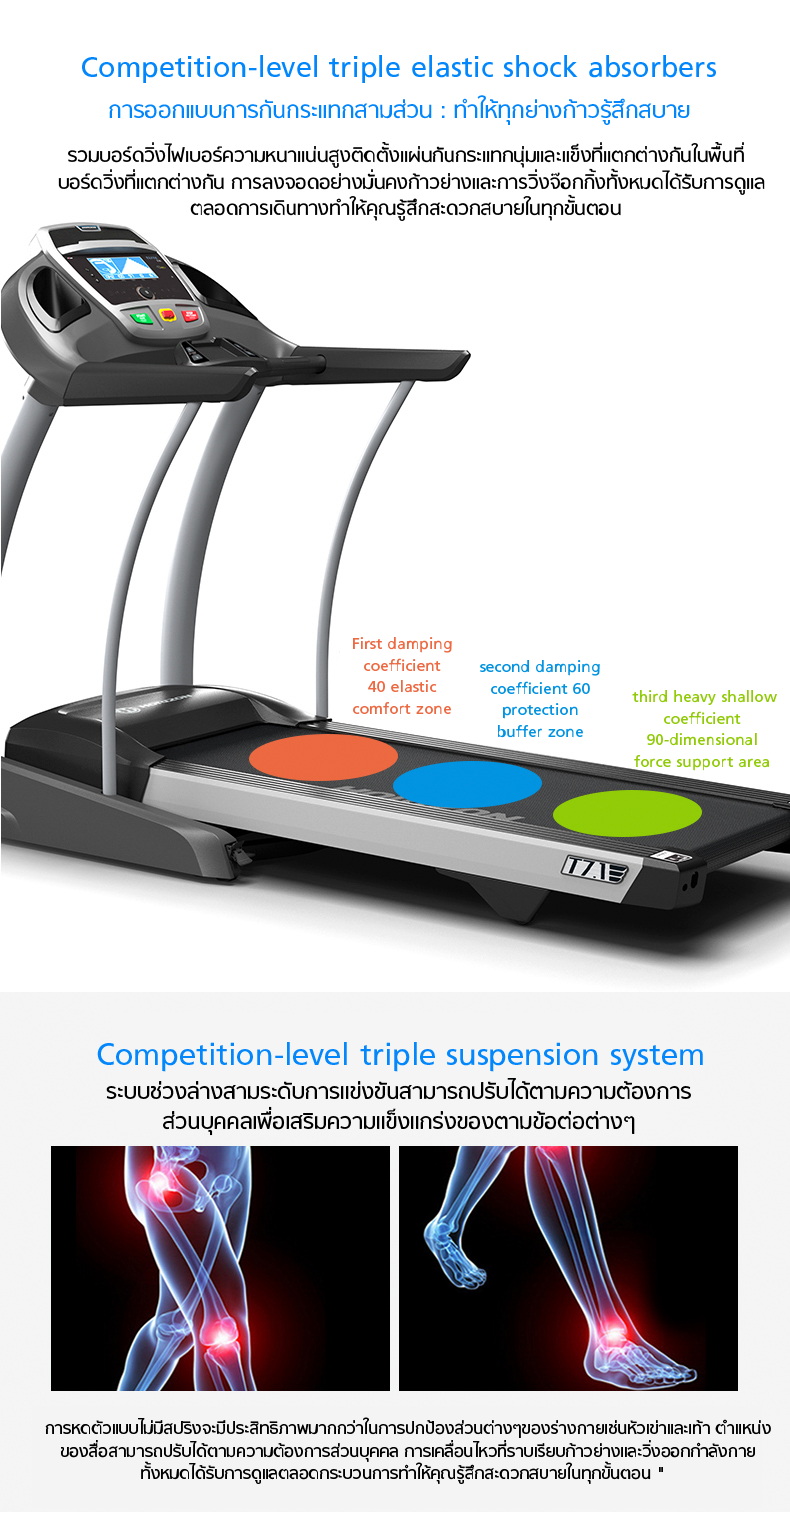 Horizon Treadmill Elite T7.1